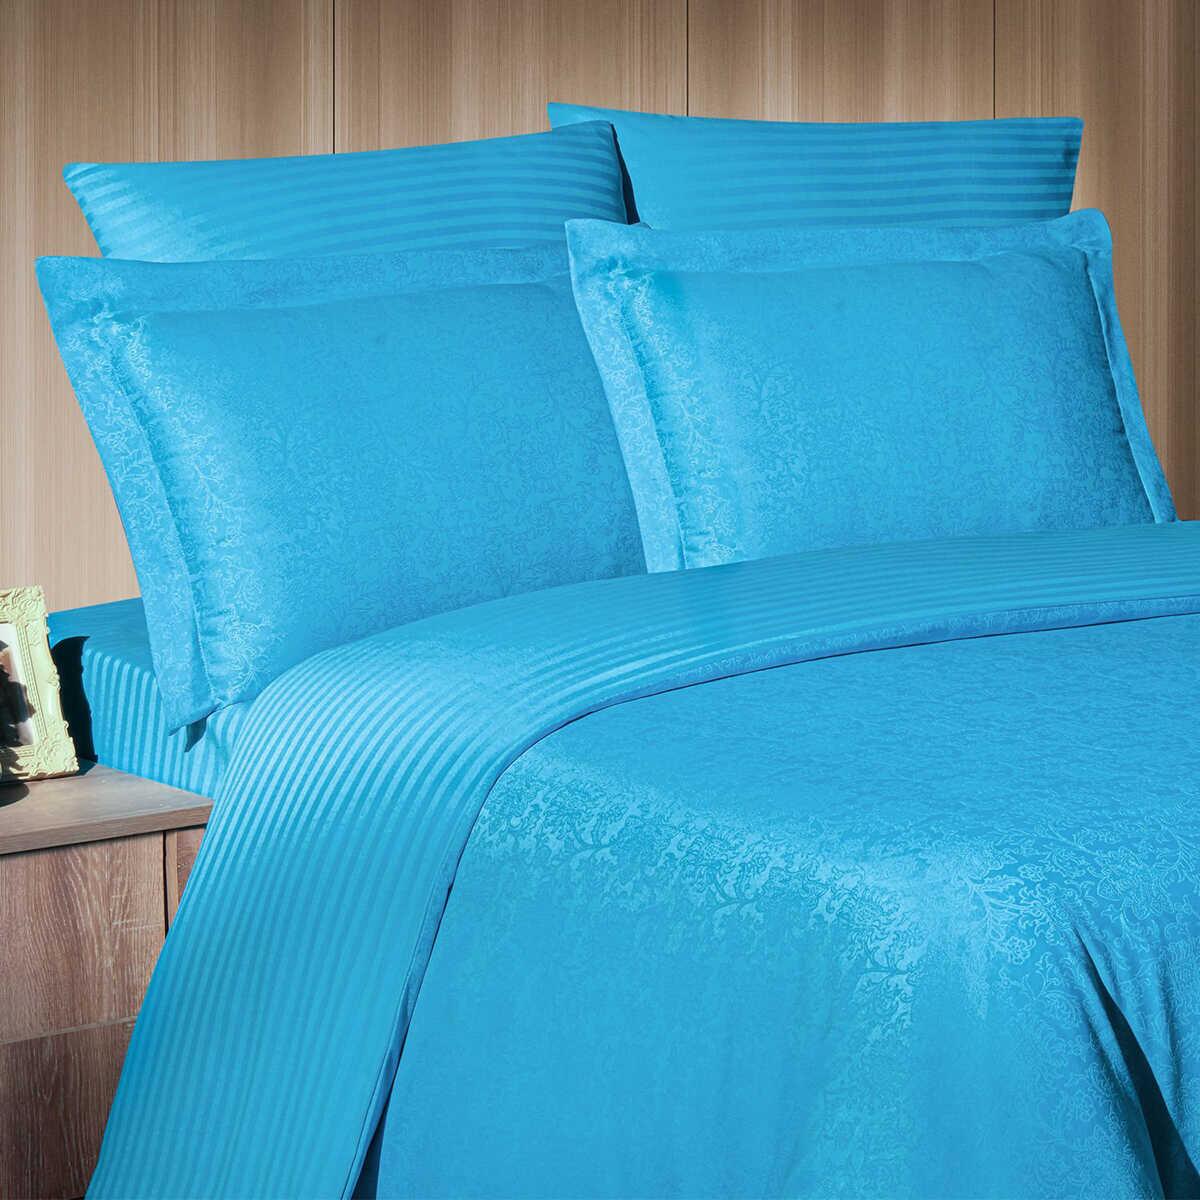 Maxstyle Jacquard Reyka Turquoise Double Duvet Cover Set